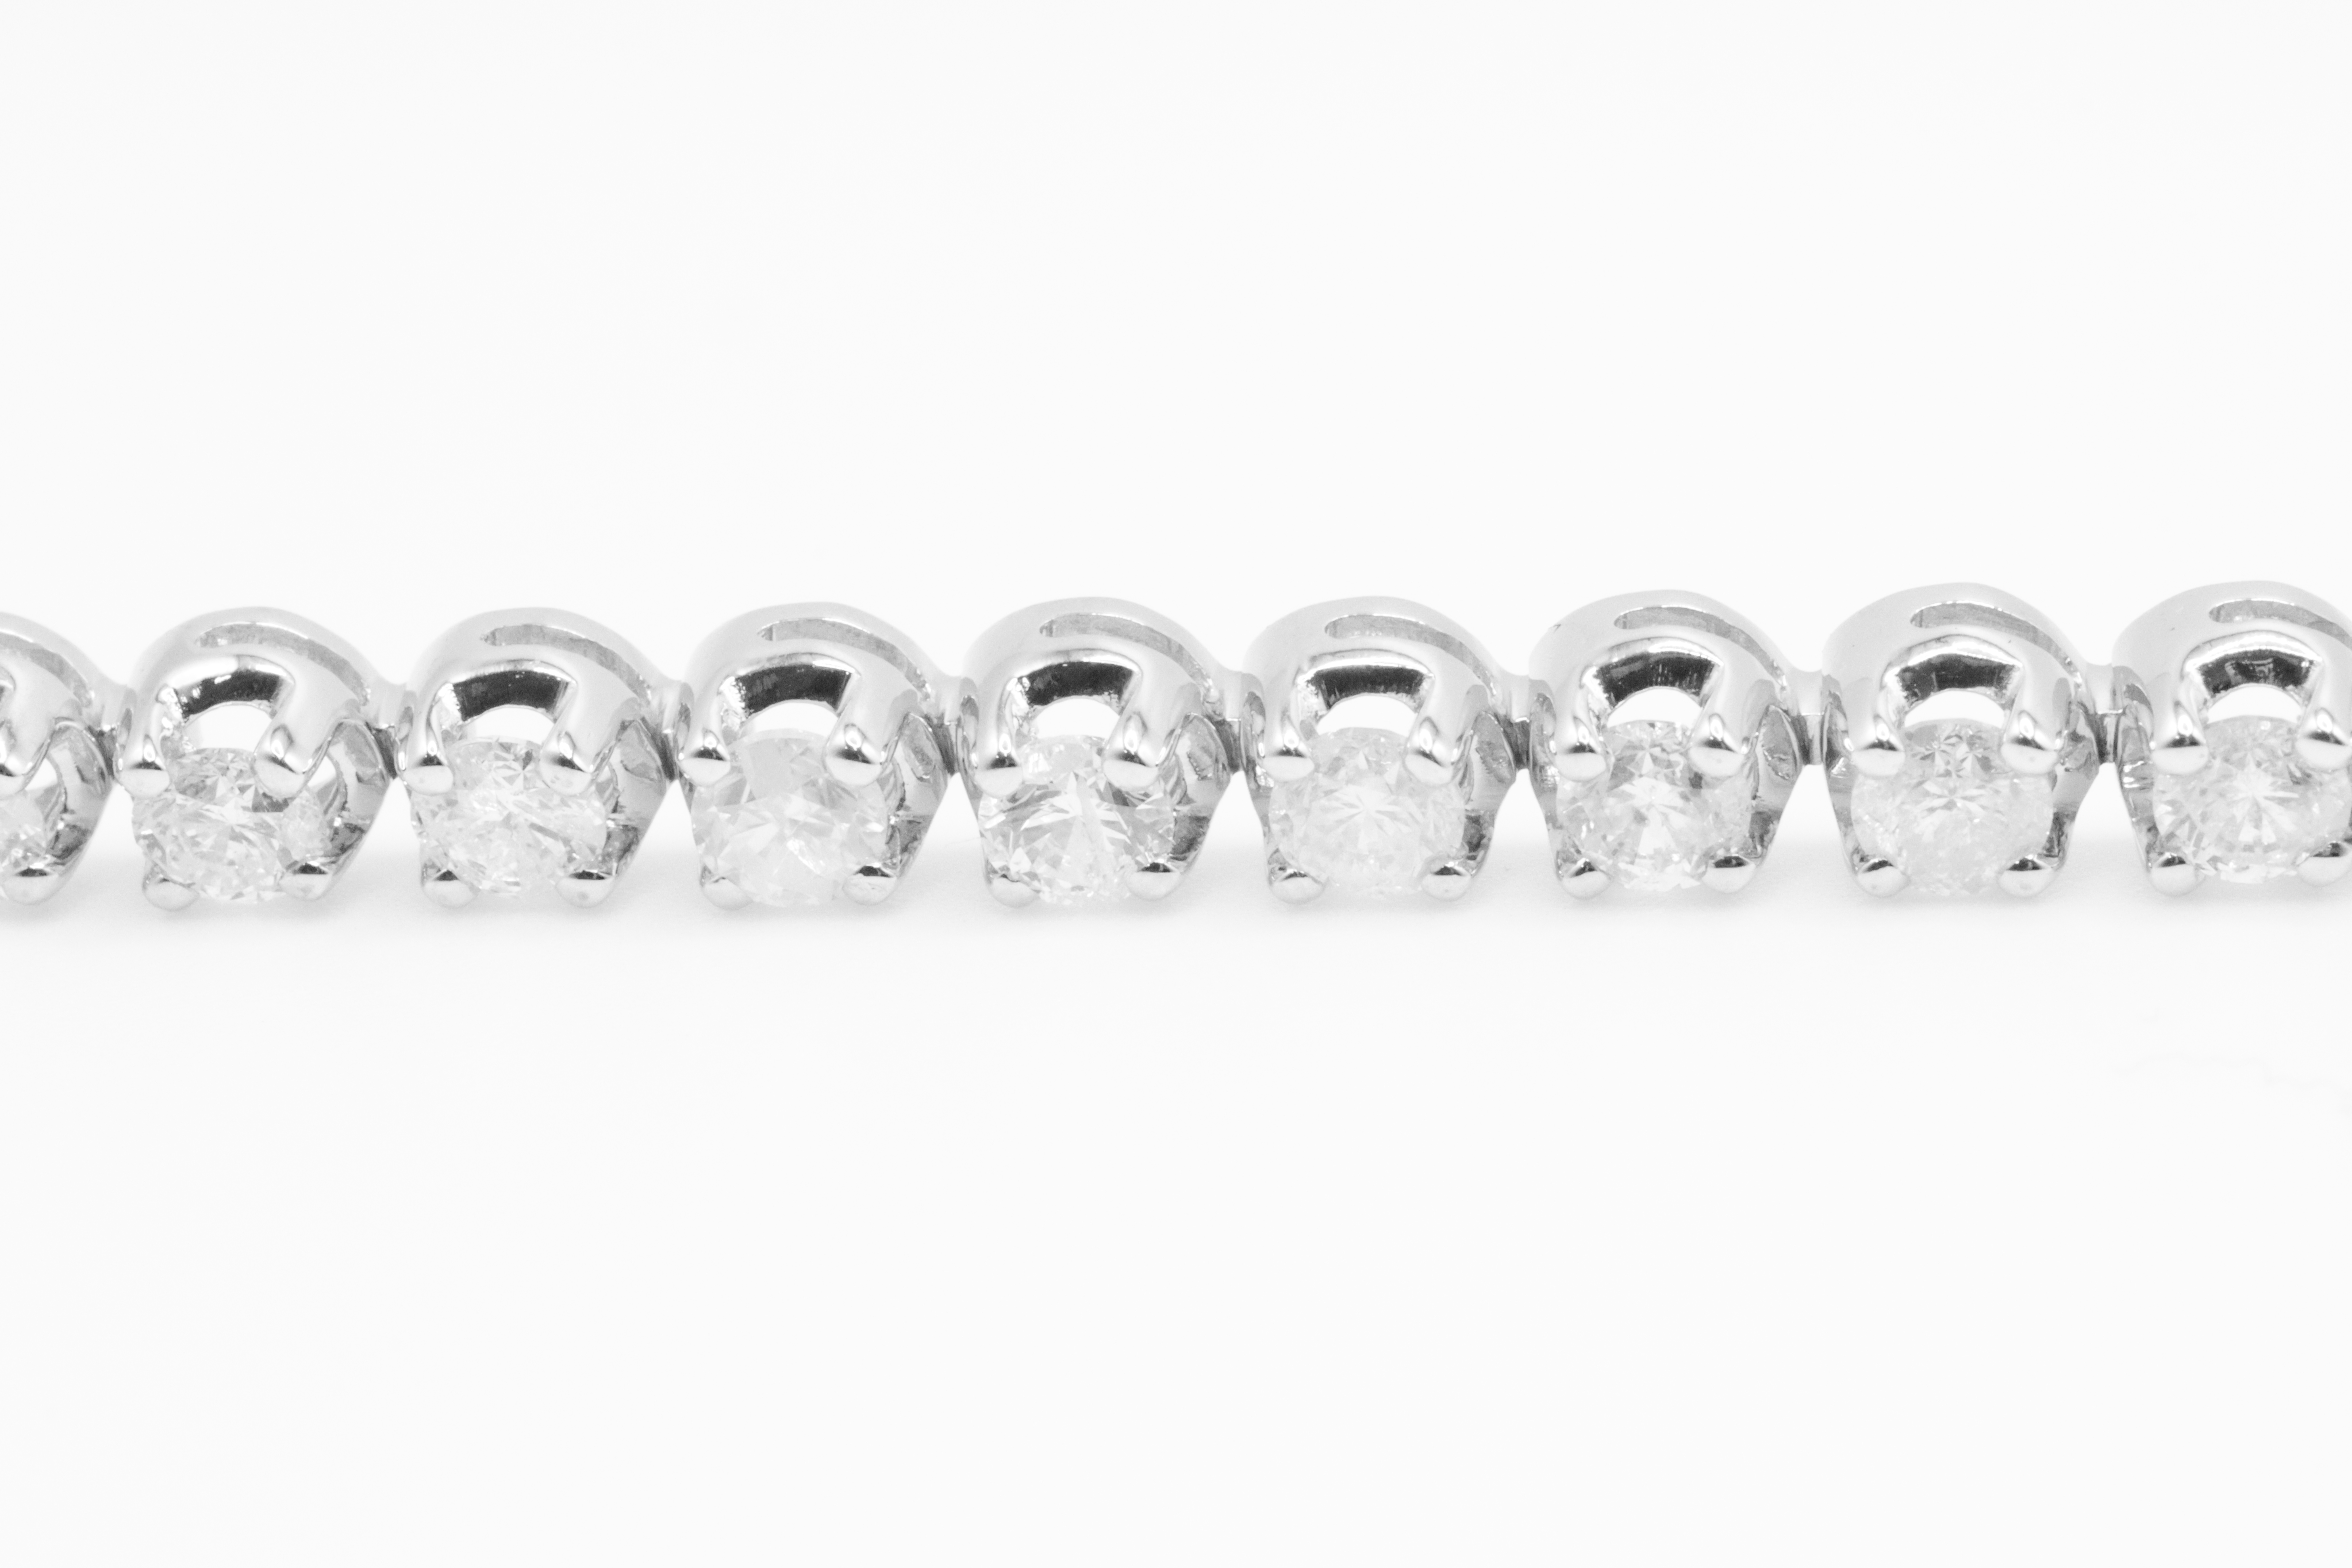 7.0 Carat 18ct White Gold Tennis Bracelet set with Round Brilliant Cut Natural Diamonds - Image 3 of 16